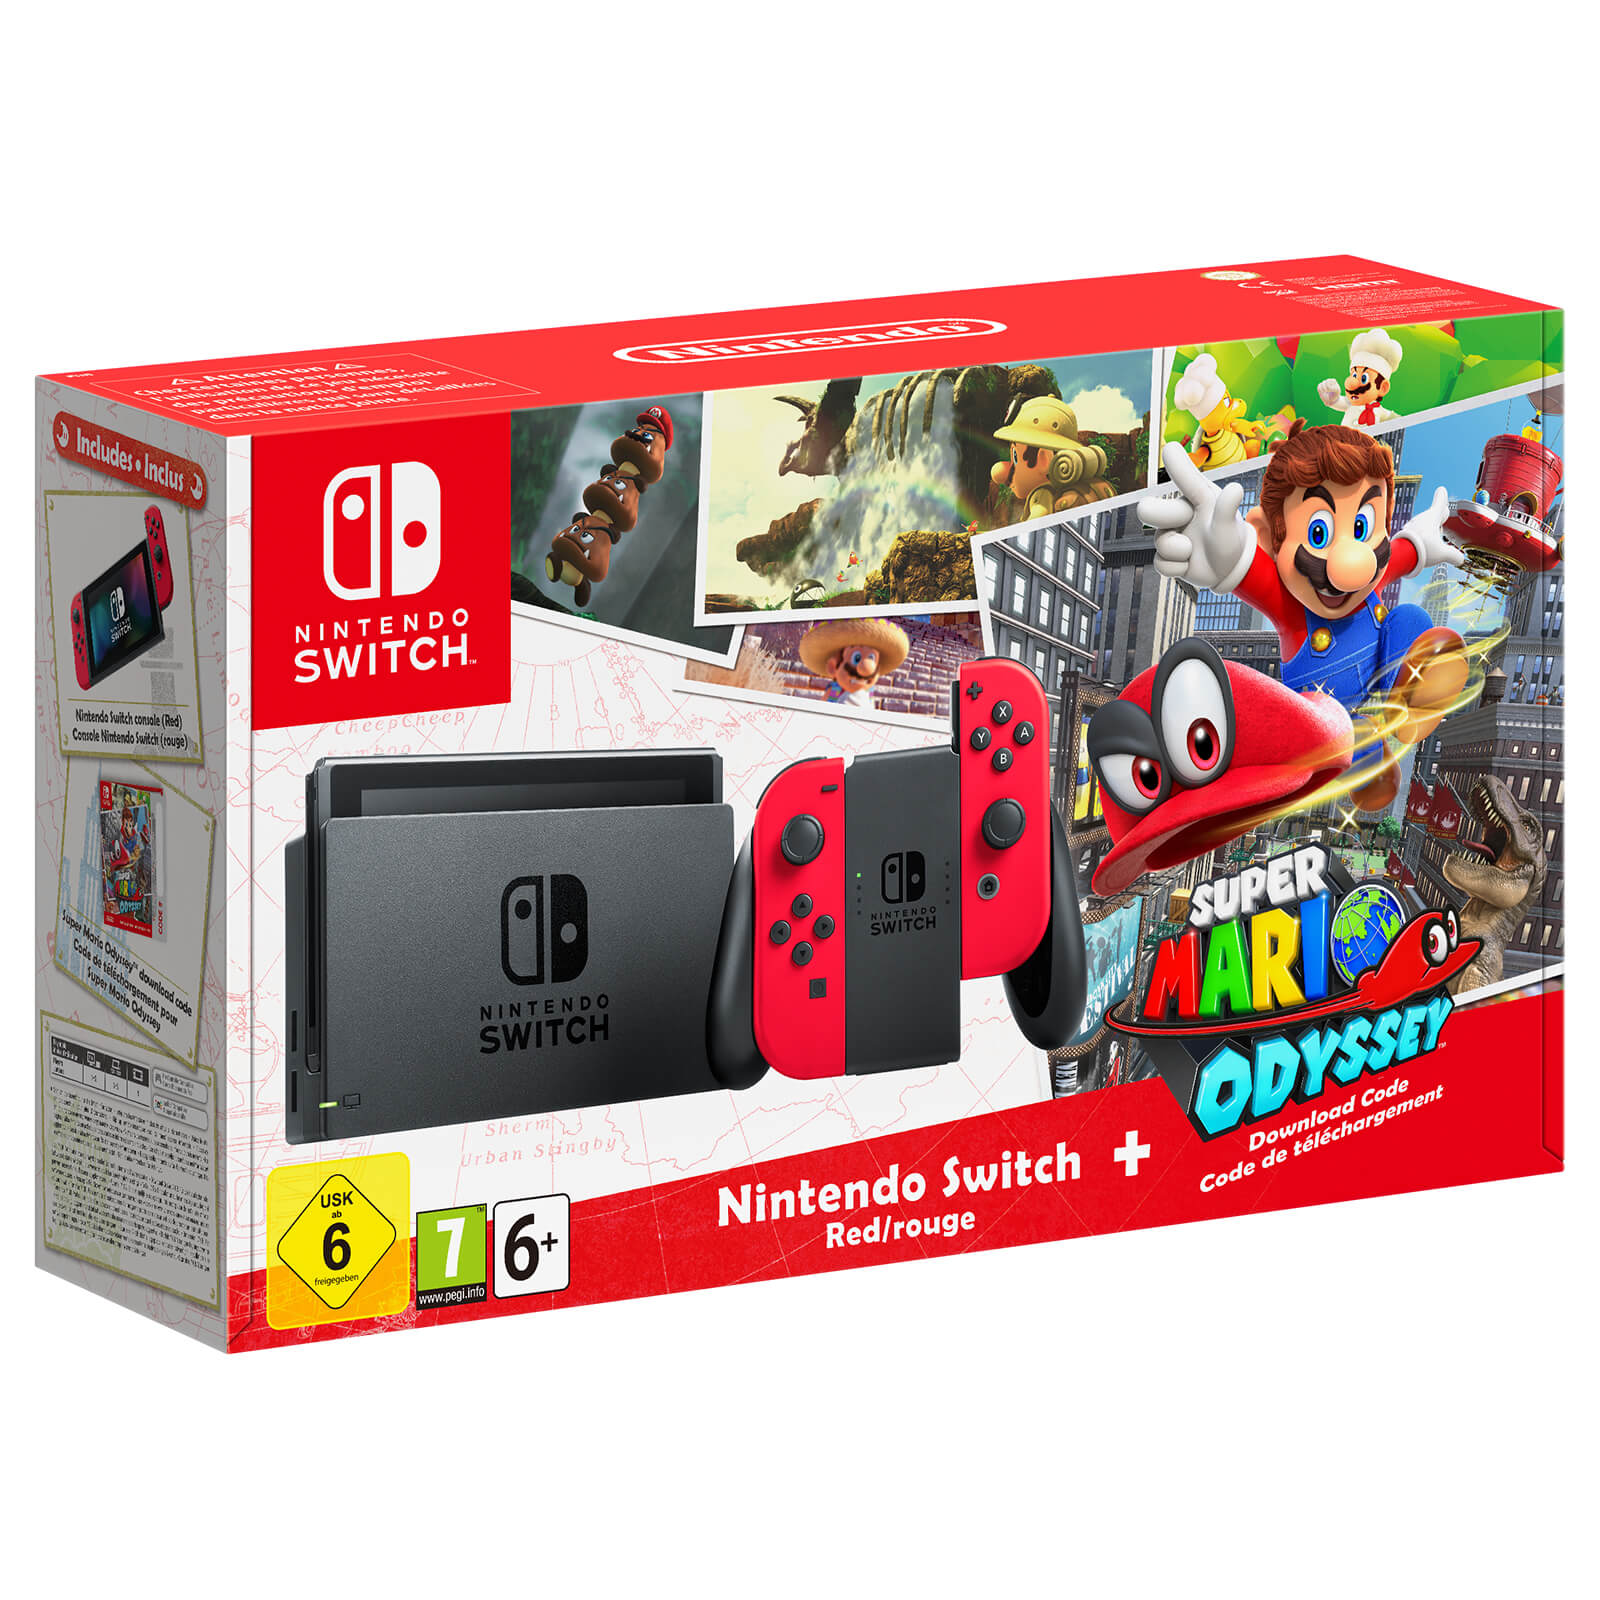 Nintendo Switch Red Joy-Con Limited Super Mario Odyssey Edition - Nintendo Switch Gépek